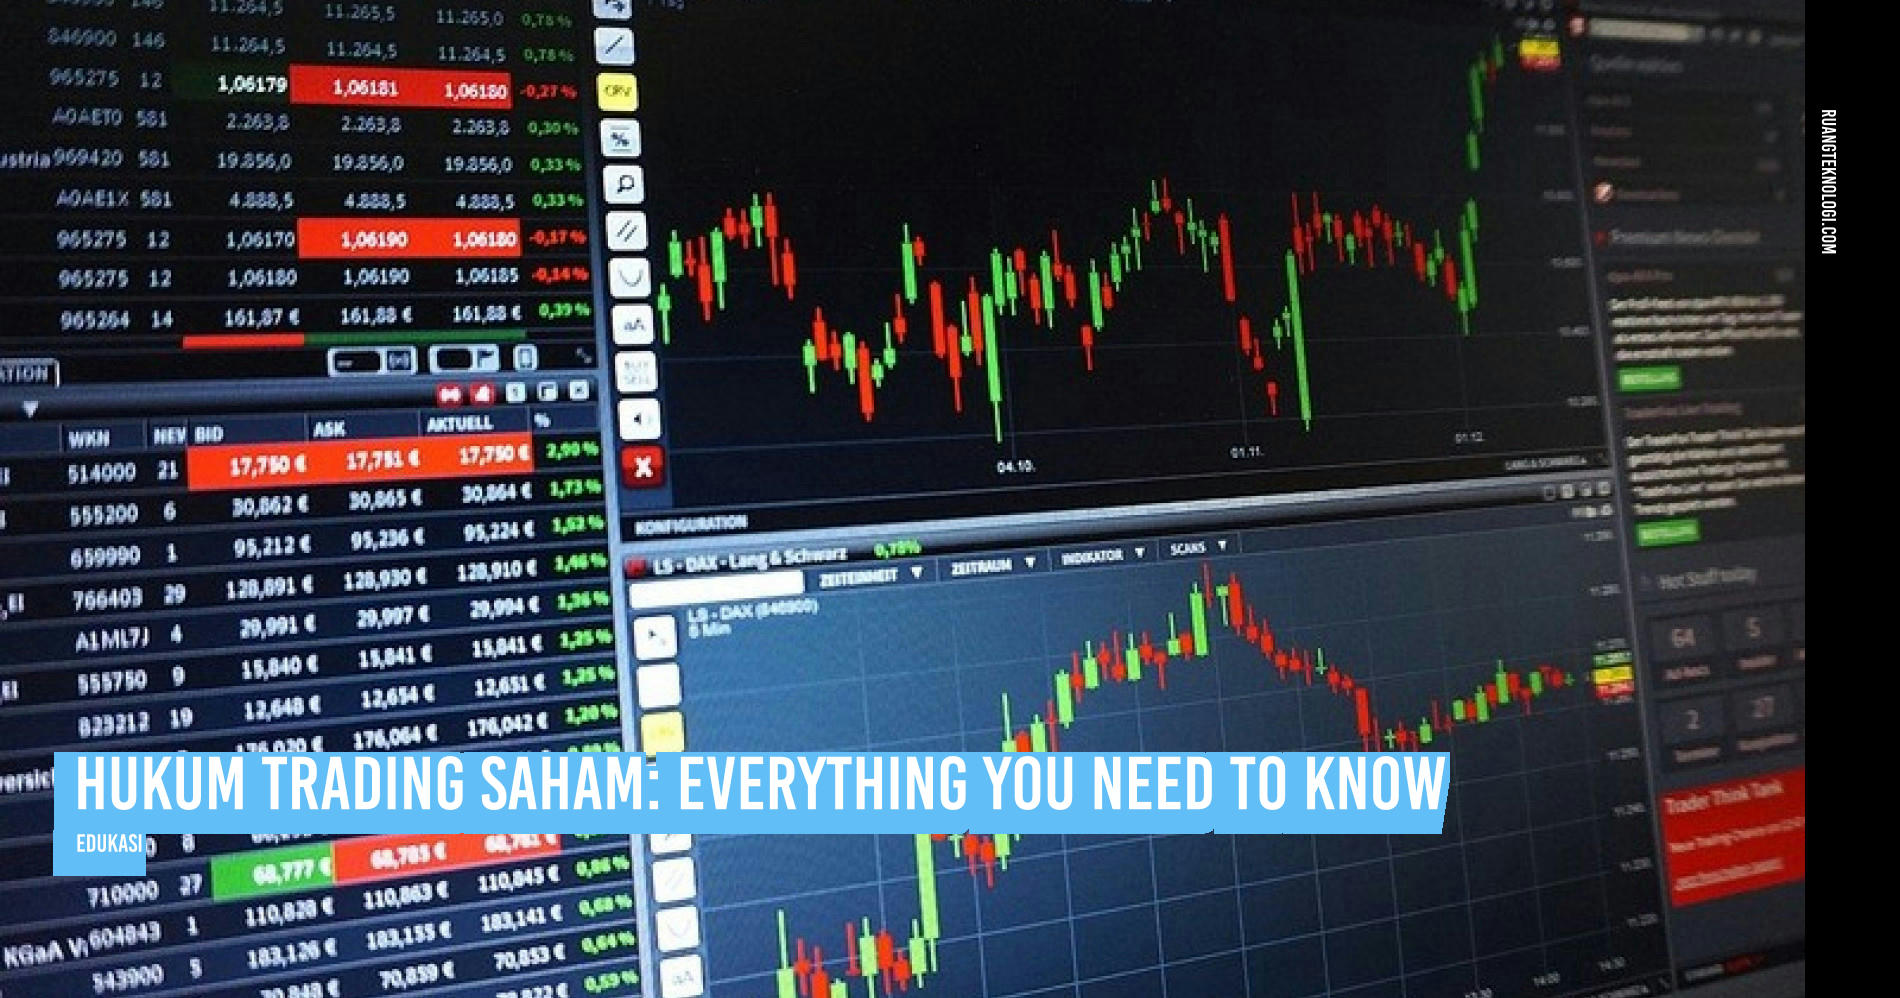 Process of Stock Trading in Hukum Trading Saham